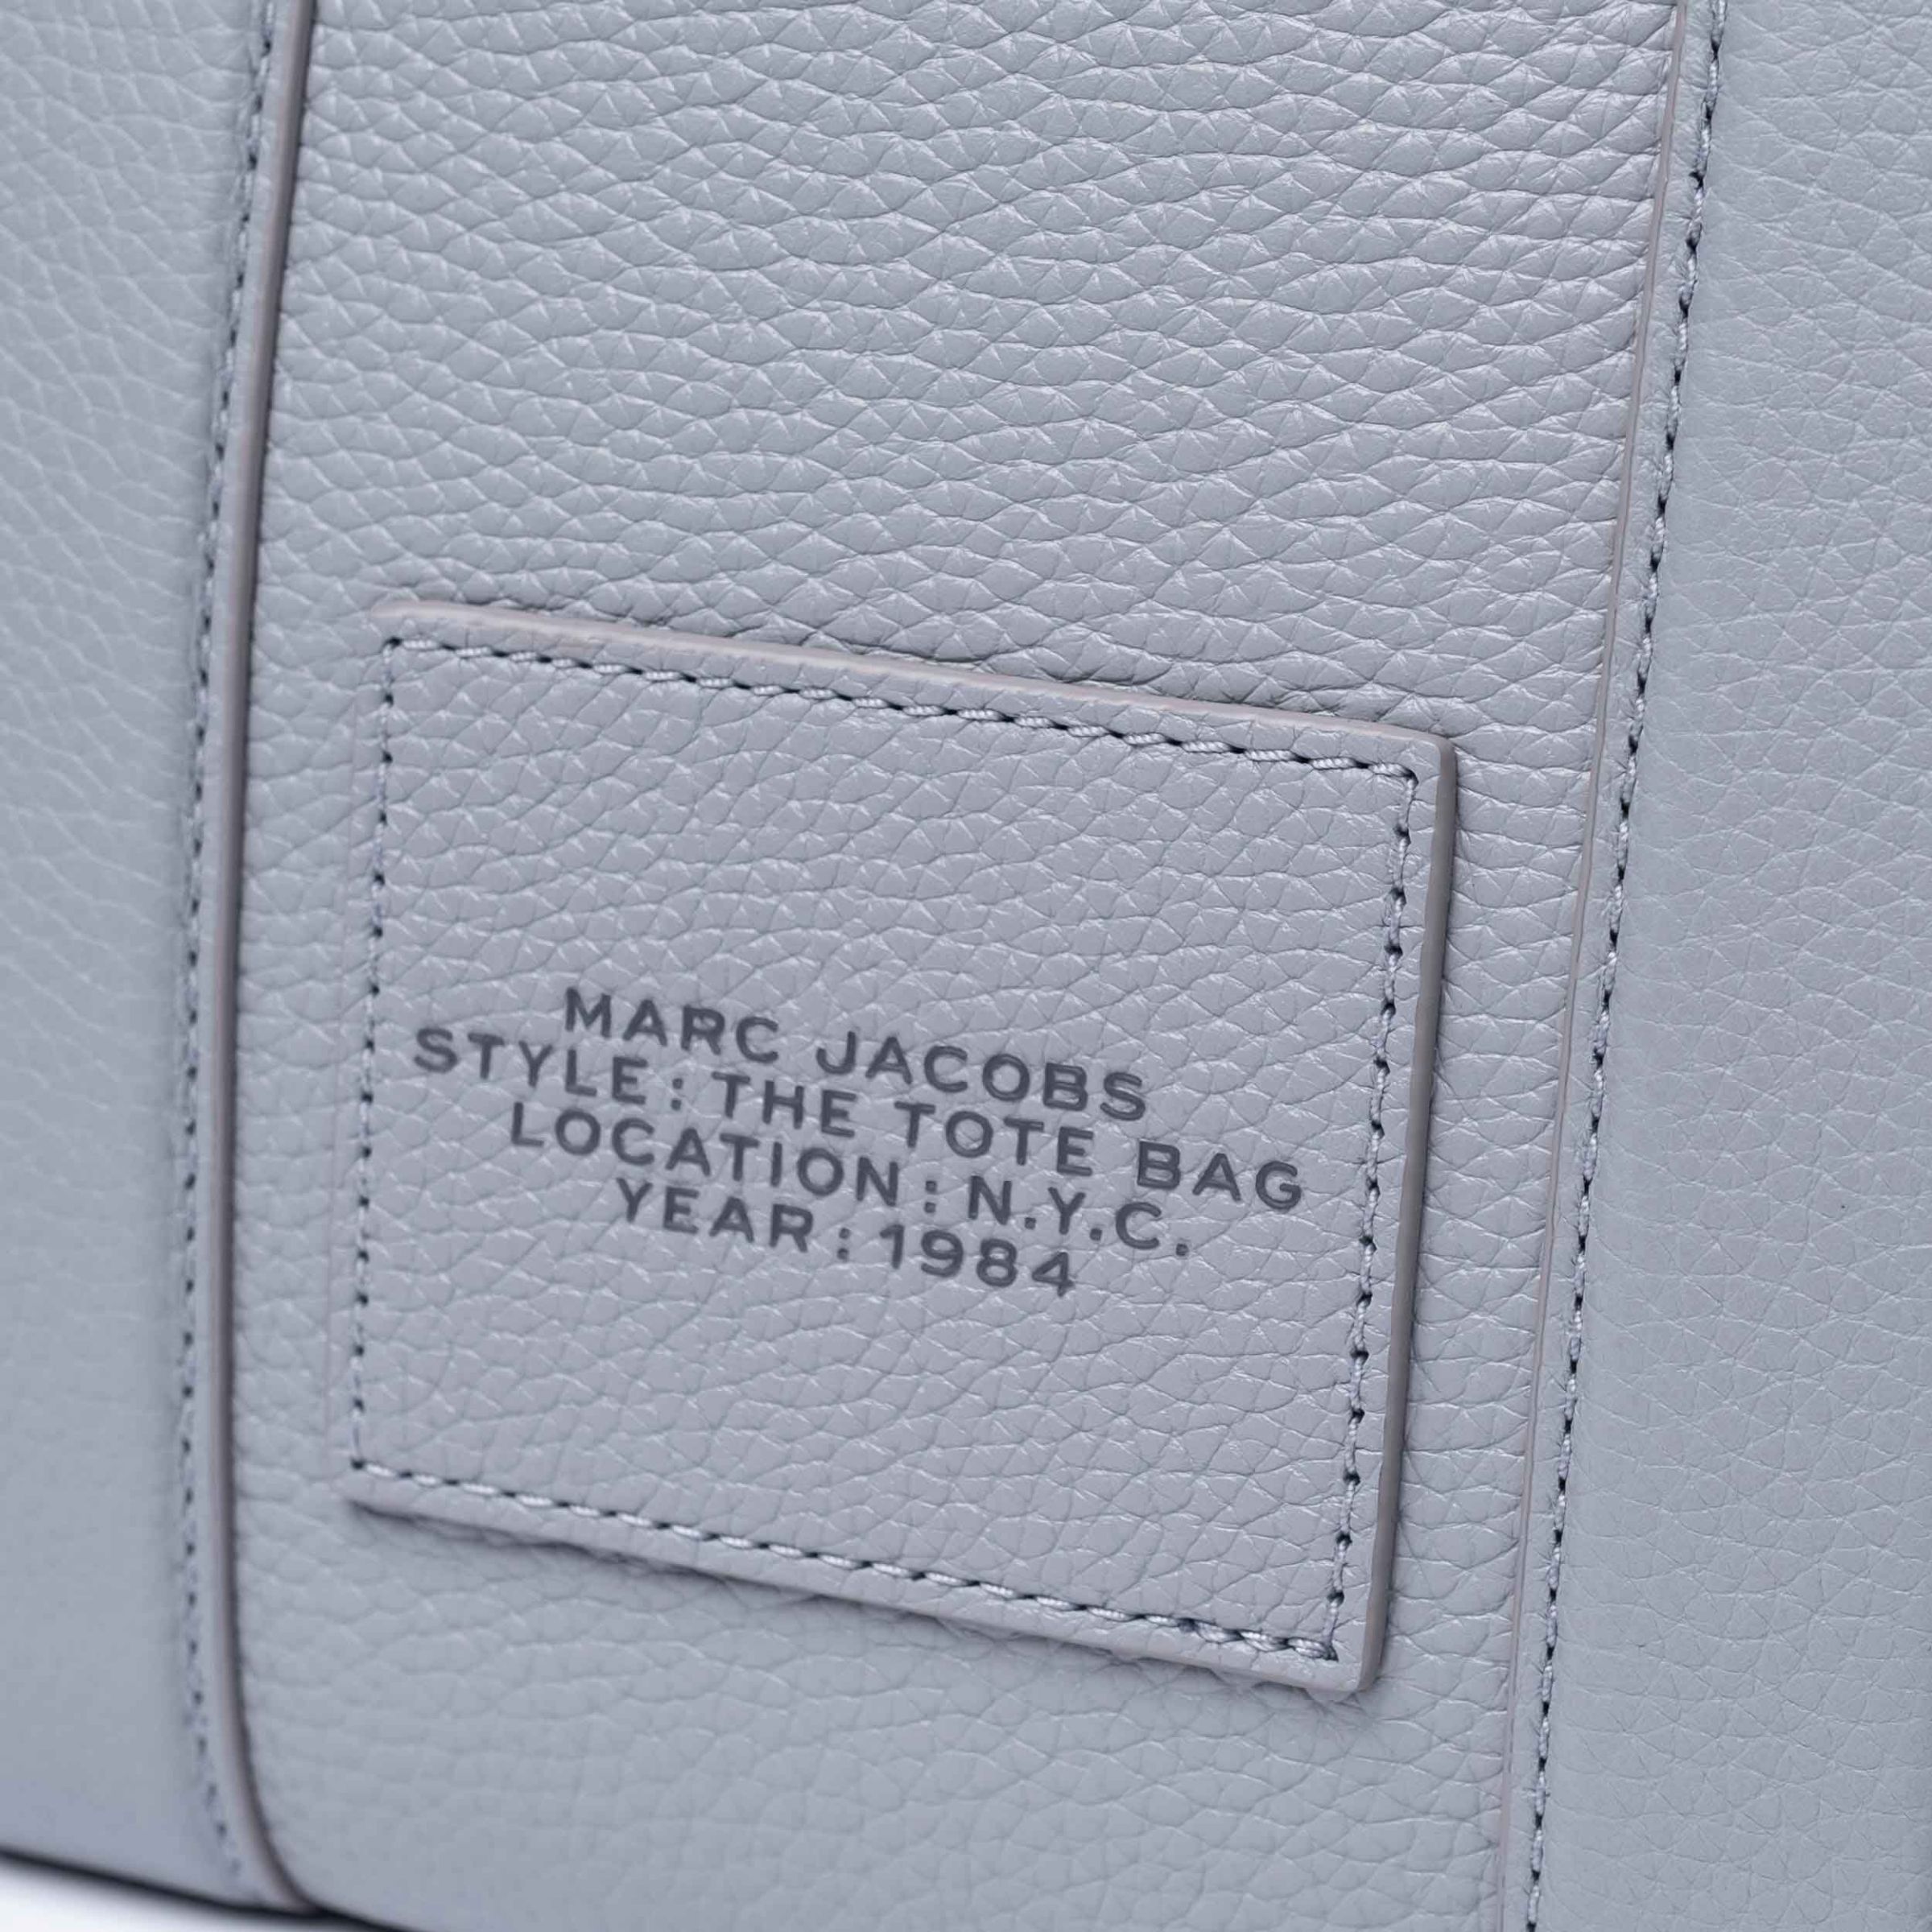 Сумка Marc Jacobs Mini Tote Bag серая